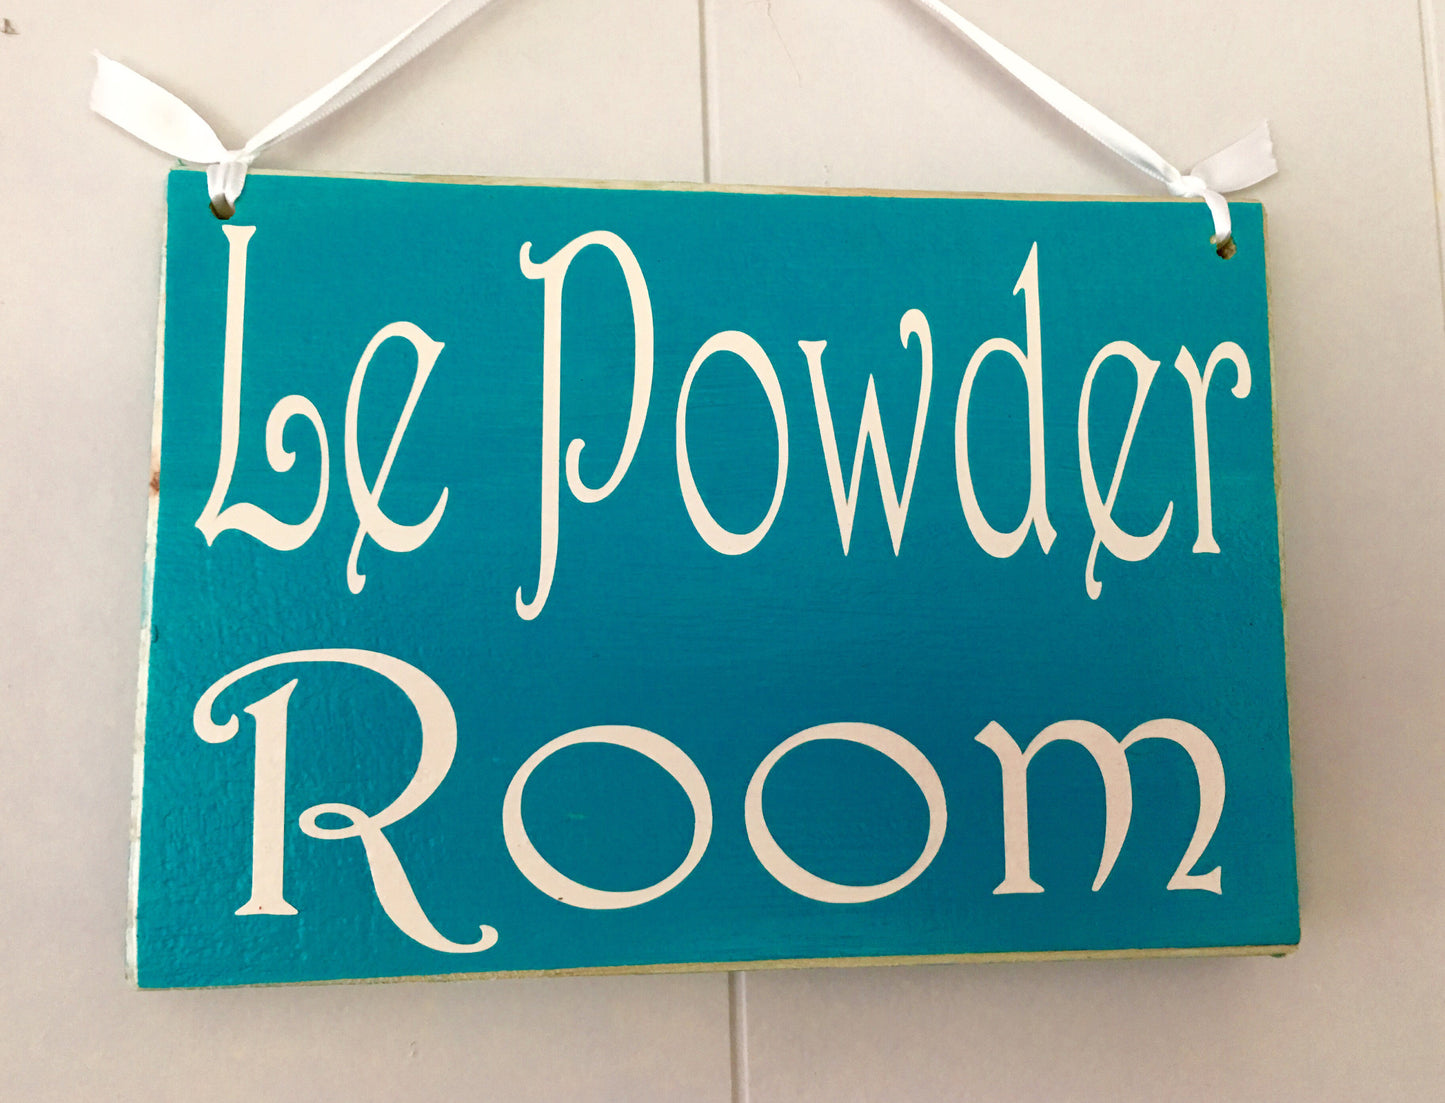 8x6 Le Powder Room Wood Sign